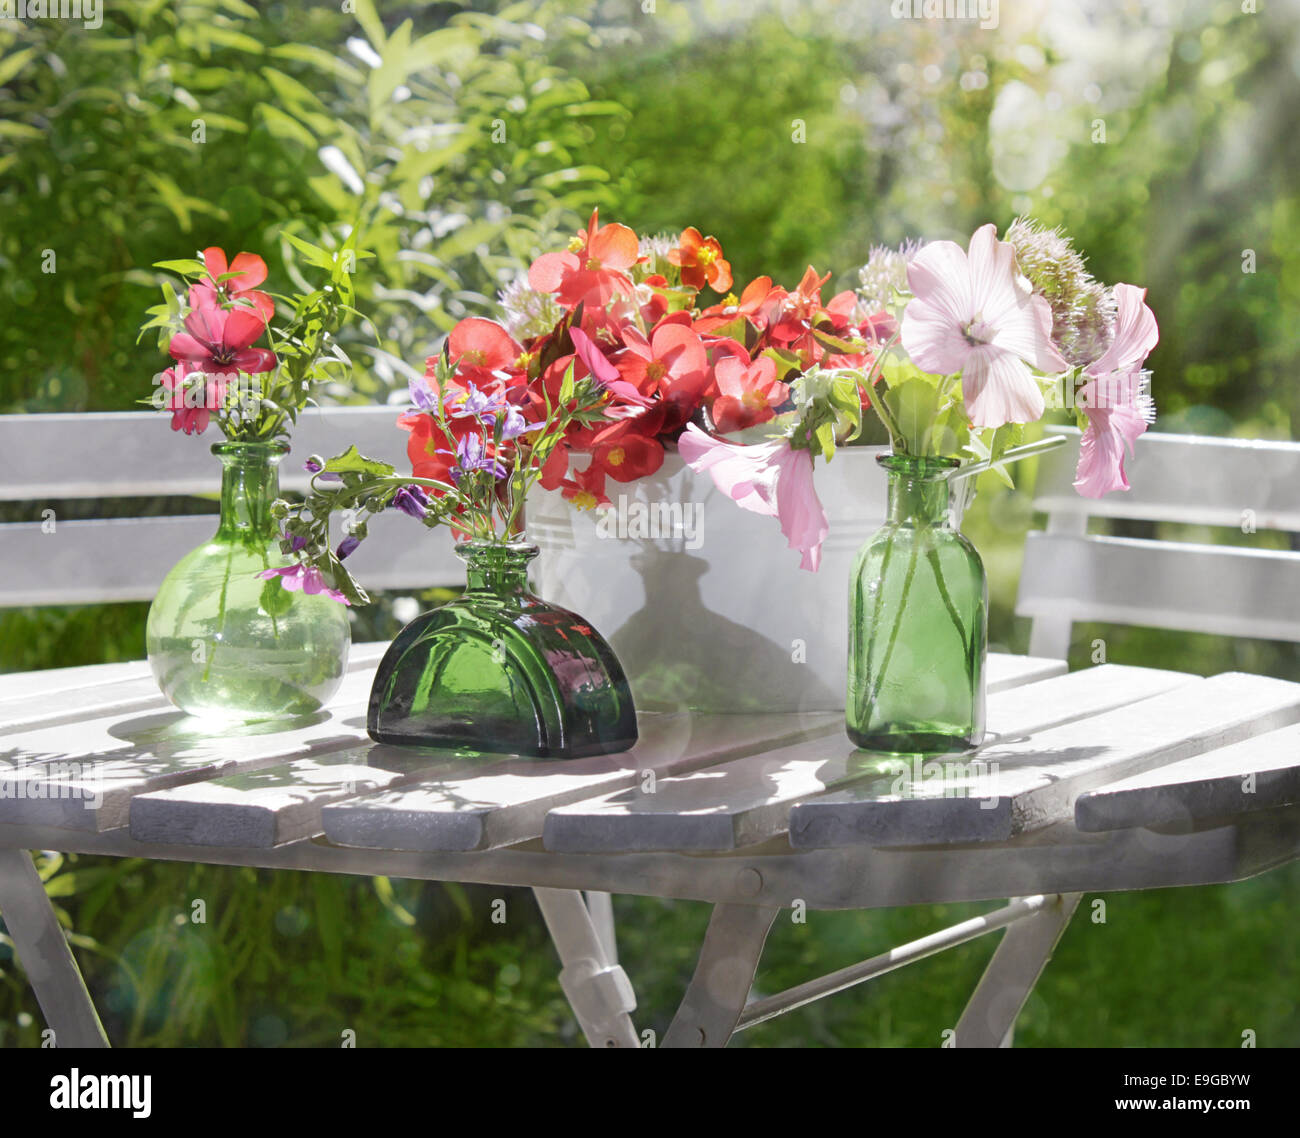 garden flowers on a garden table Stock Photo